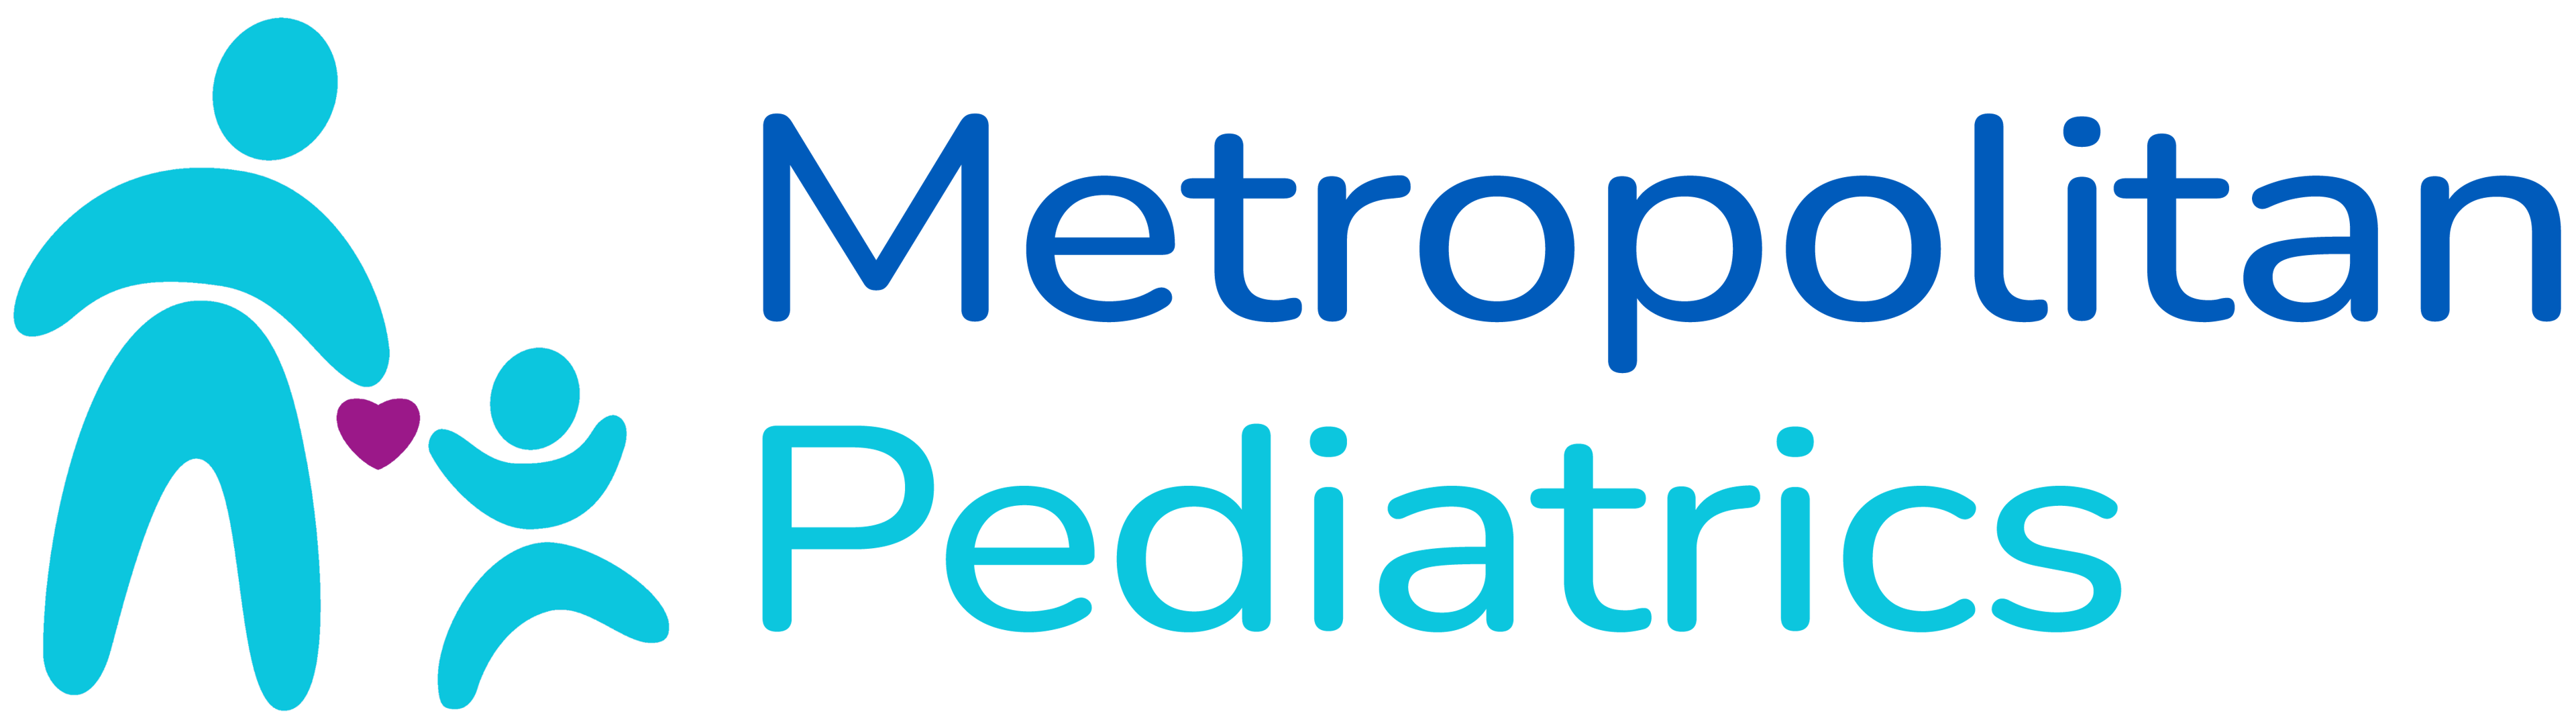 Metropolitan Pediatrics logo